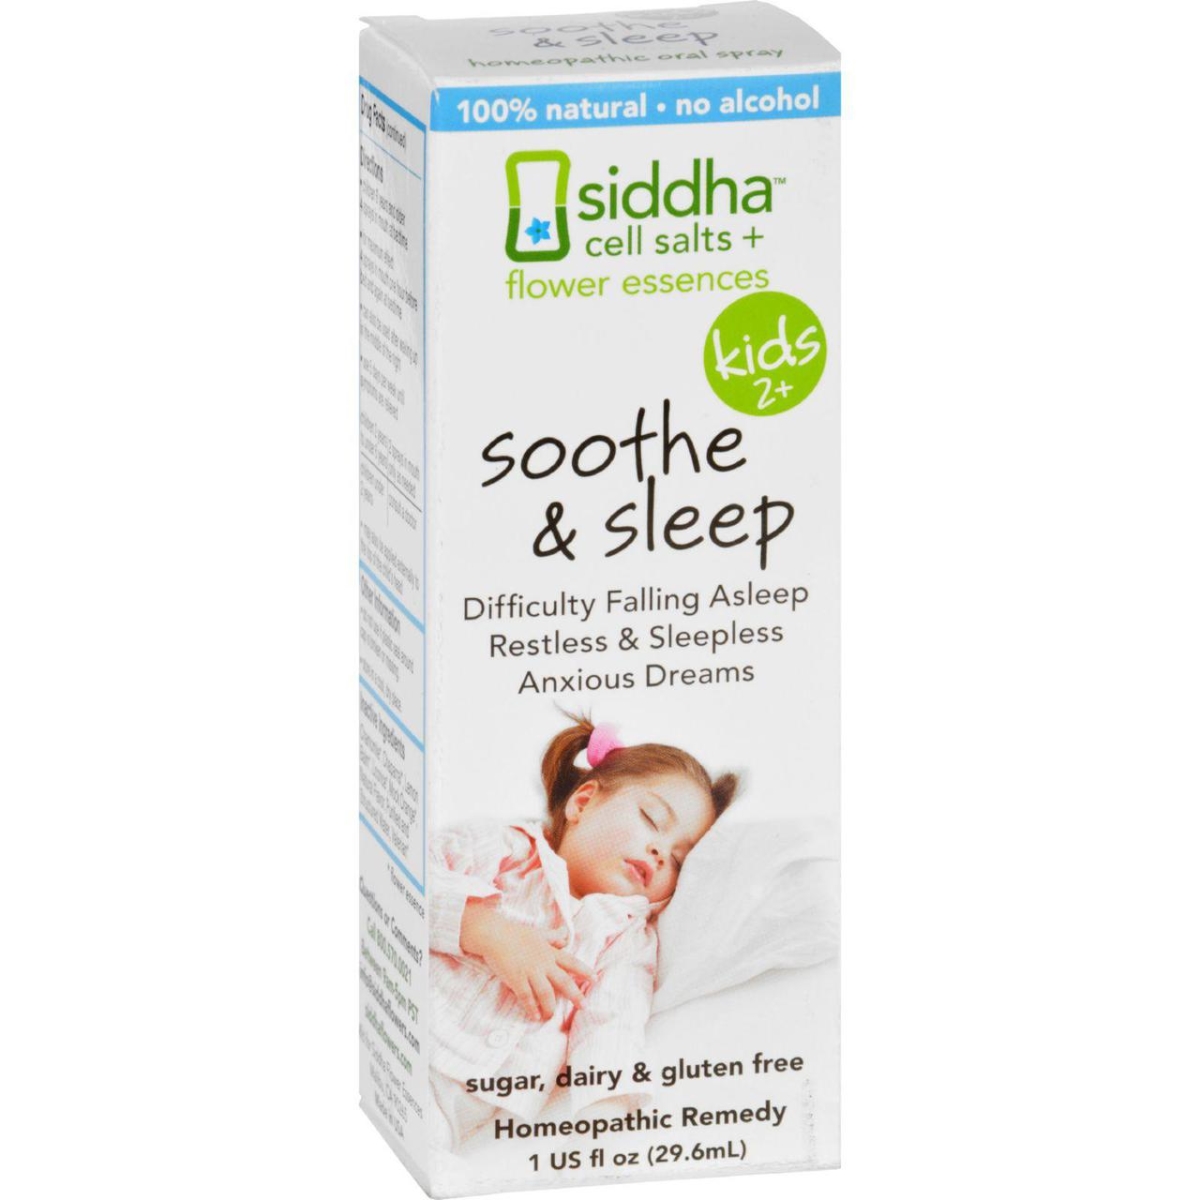 Sidda Flower Essences HG1557008 1 fl oz Soothe & Sleep for Kids - Age Two Plus